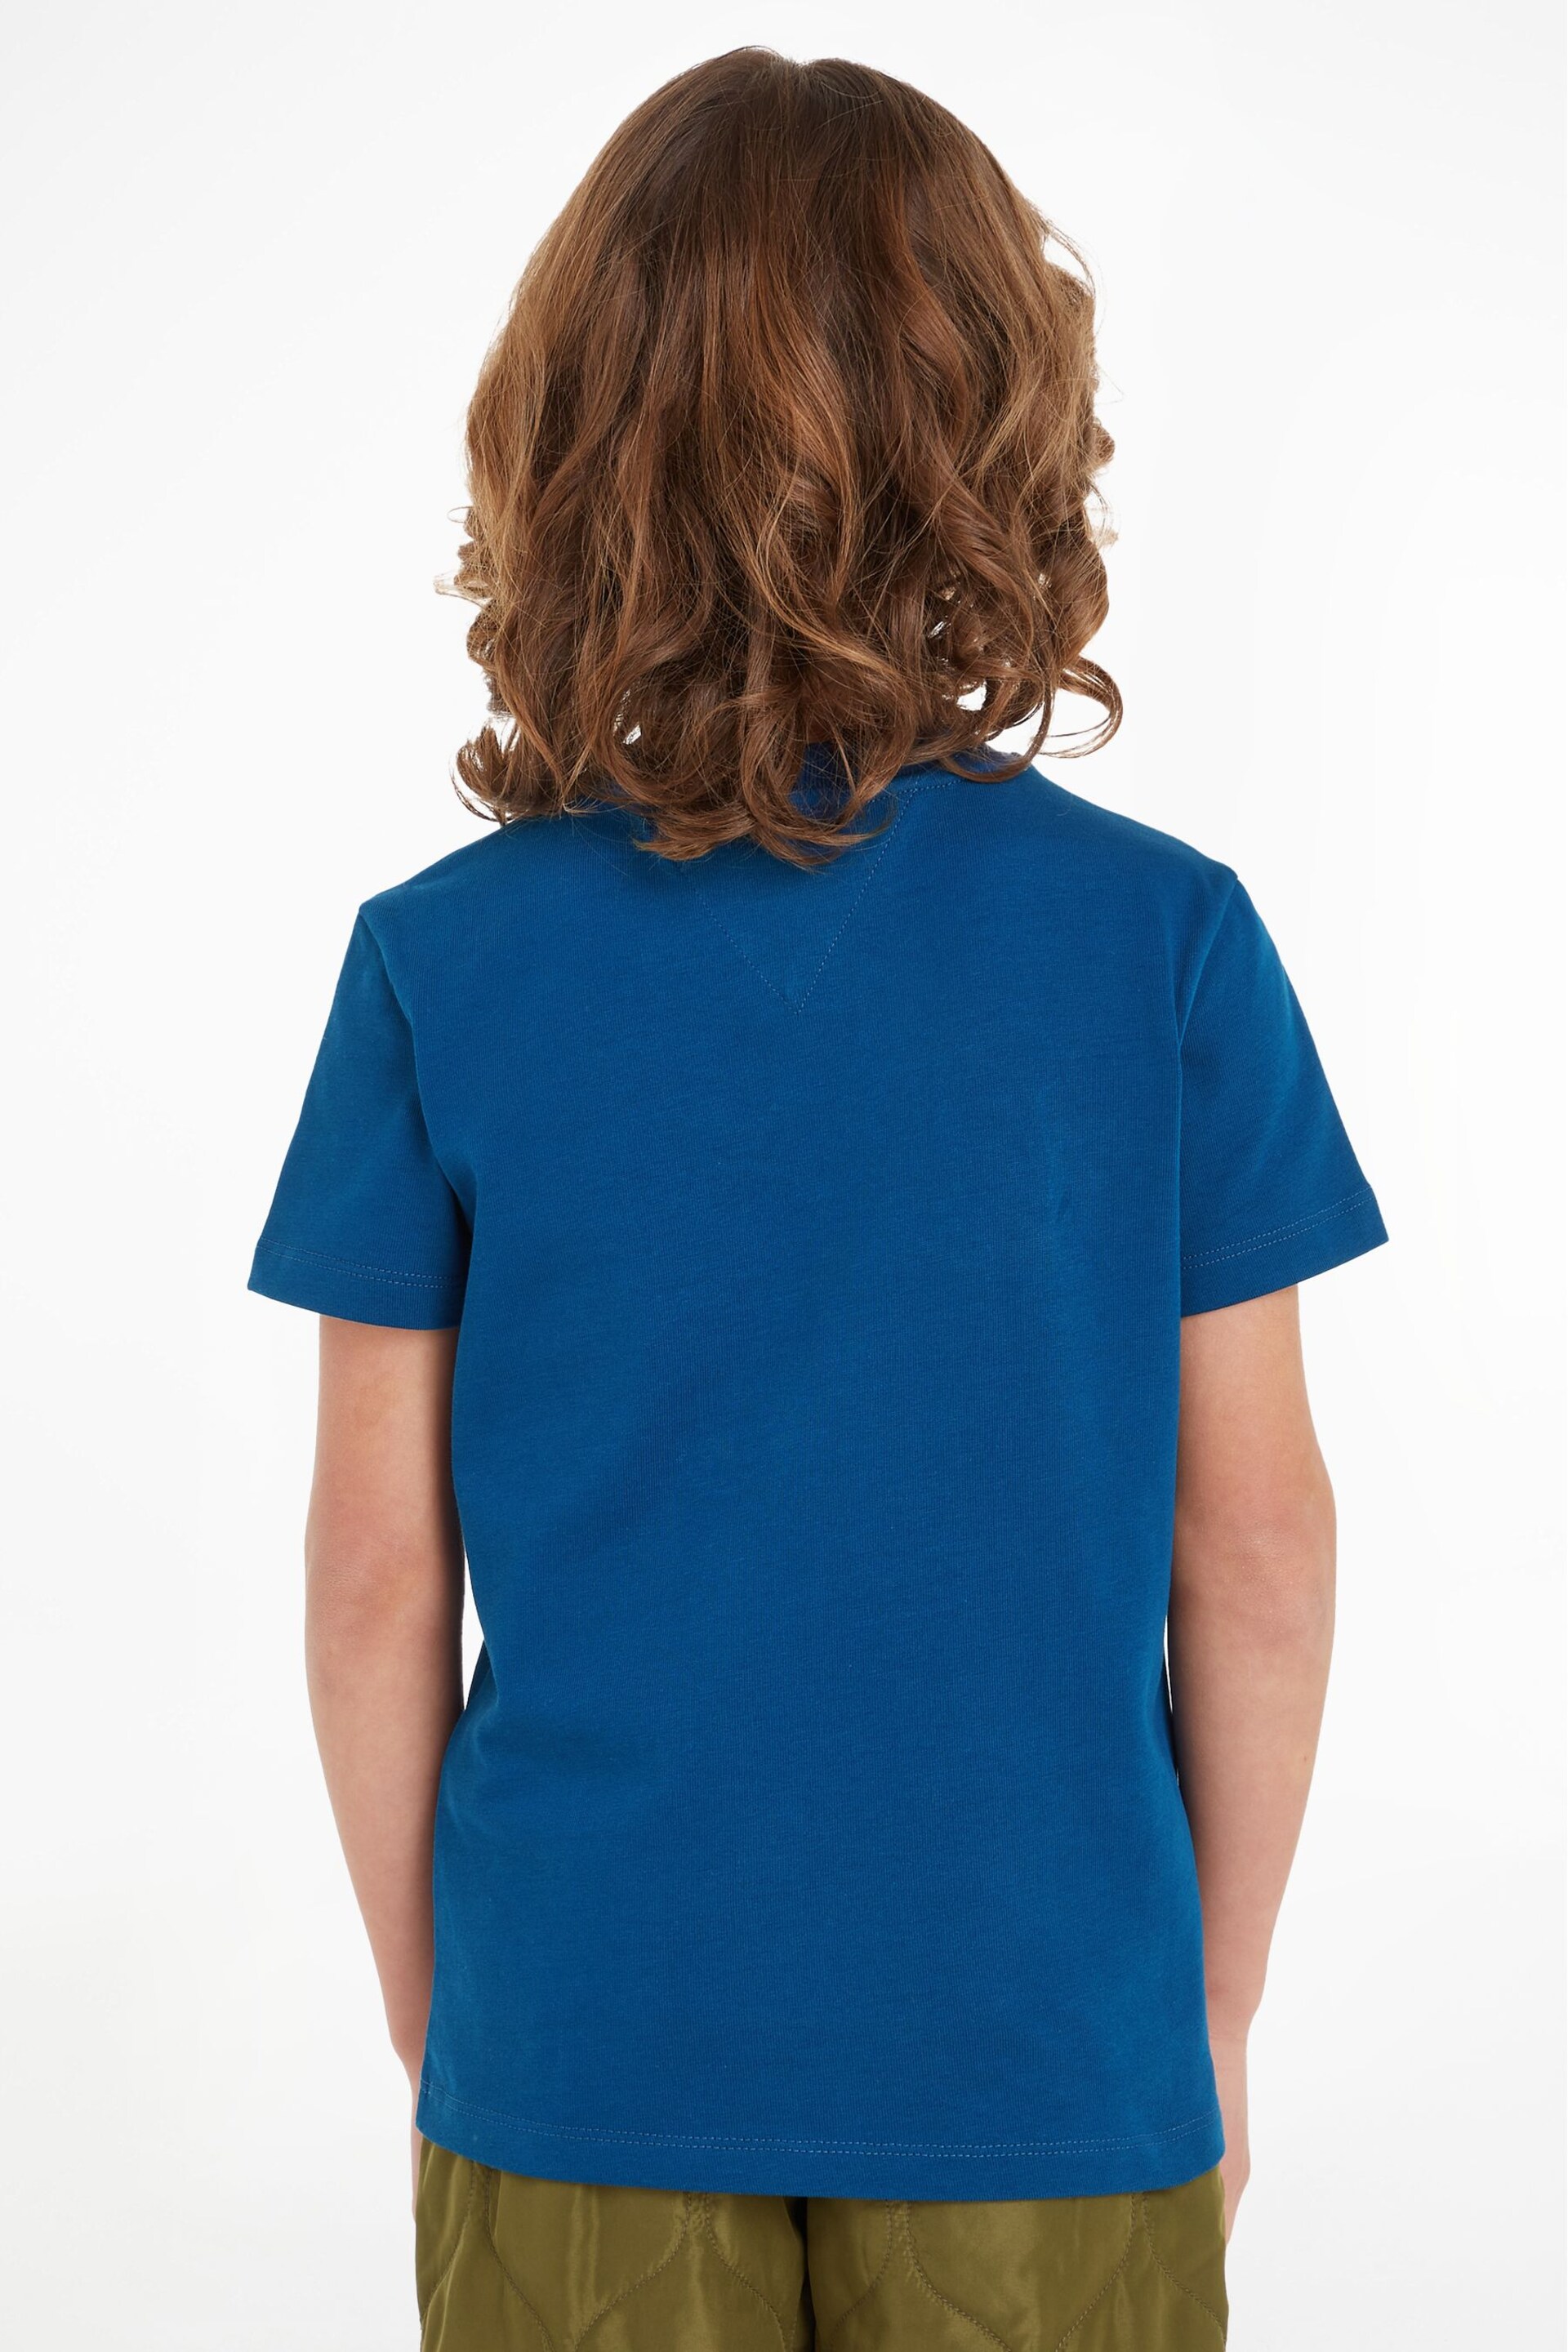 Tommy Hilfiger Unisex Kids Blue Monogram T-Shirt - Image 2 of 6